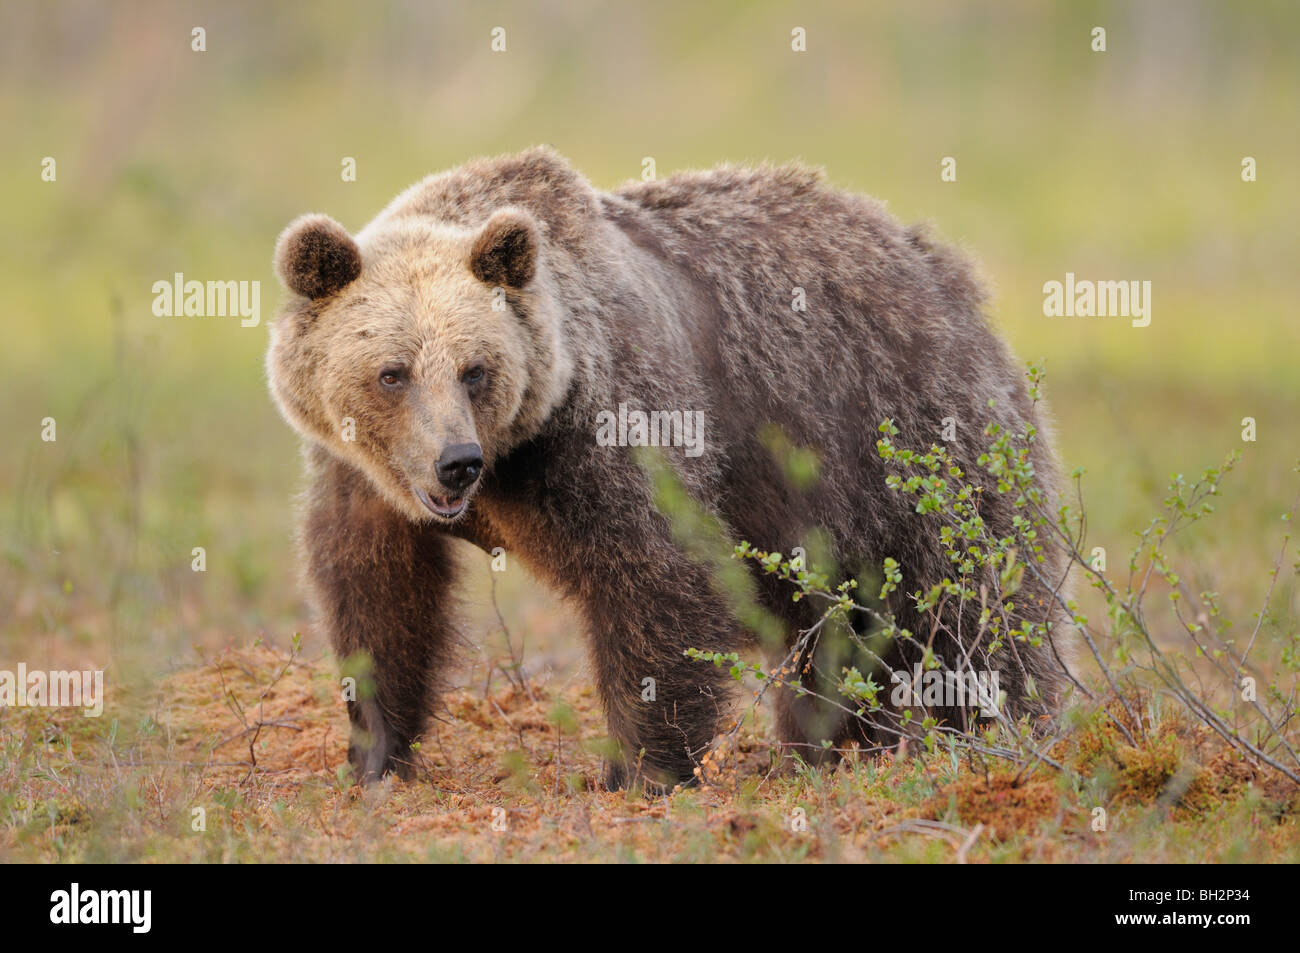 Oso Pardo europeo Ursos arctos fotografiado en Finlandia Foto de stock